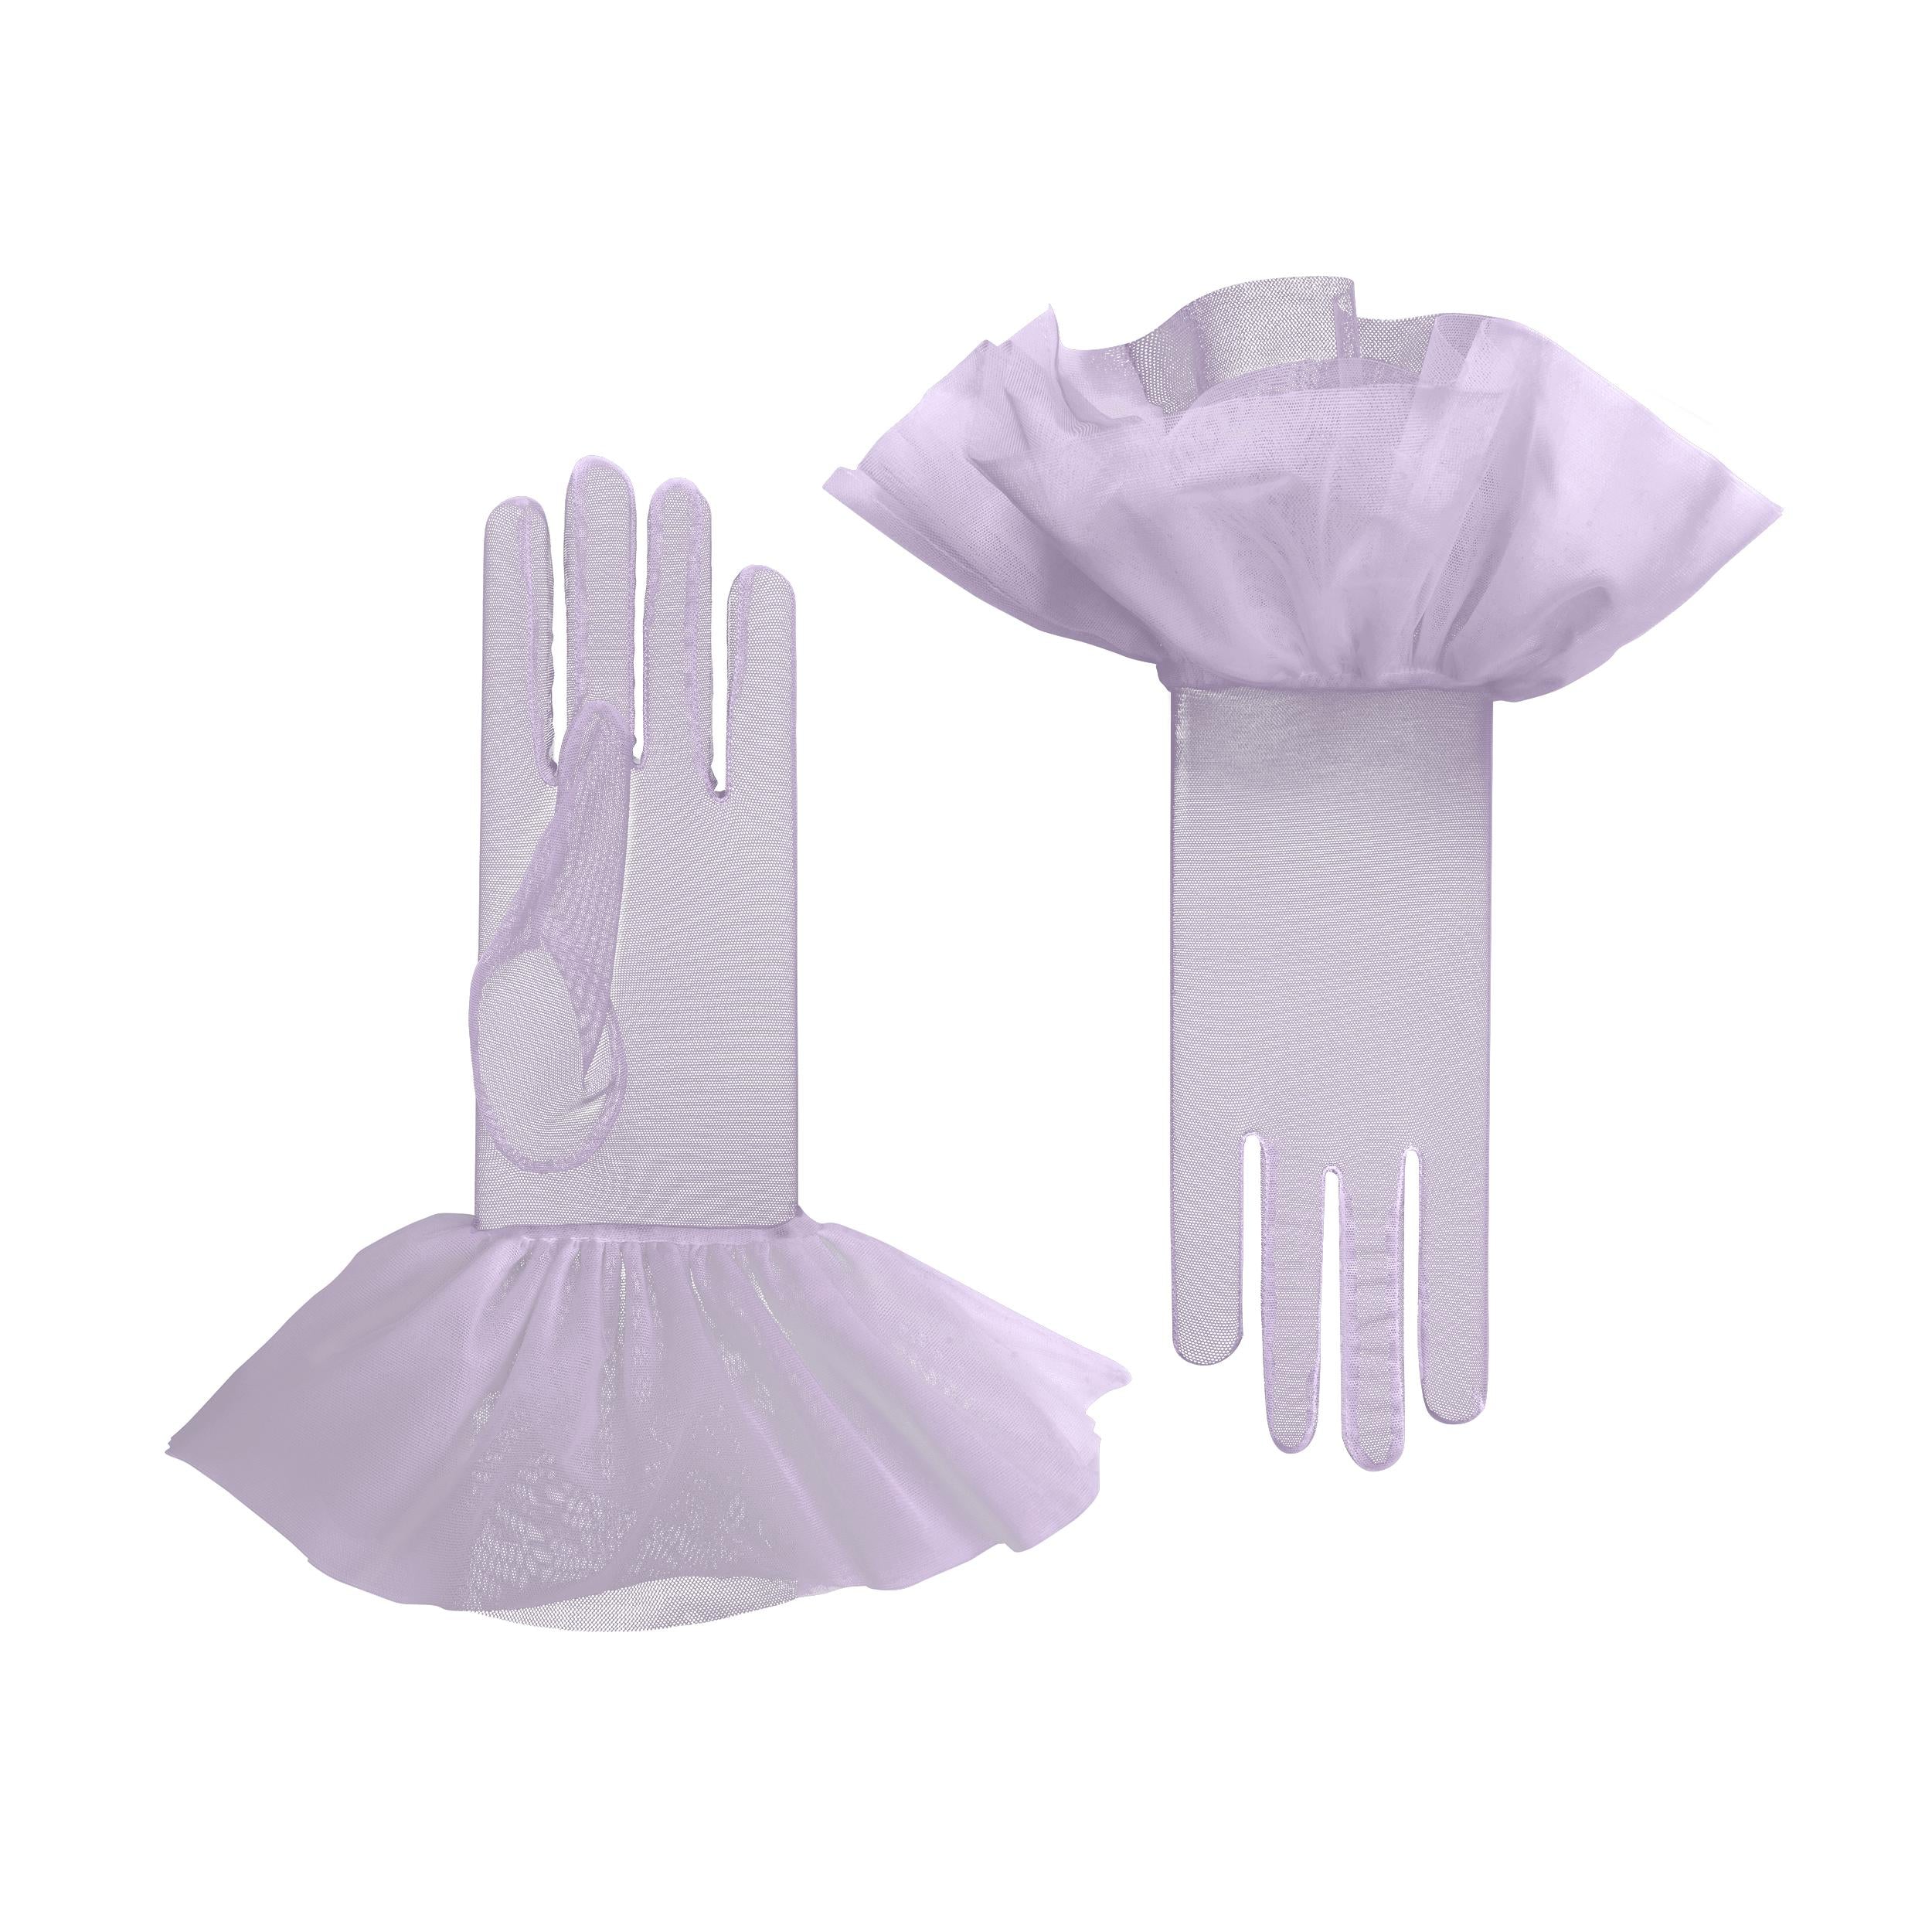 Cornelia James - Purple Tulle Gloves with Harlequin Cuff - Lara - Size Large (8½) - Handmade Tulle Gloves by Cornelia James product